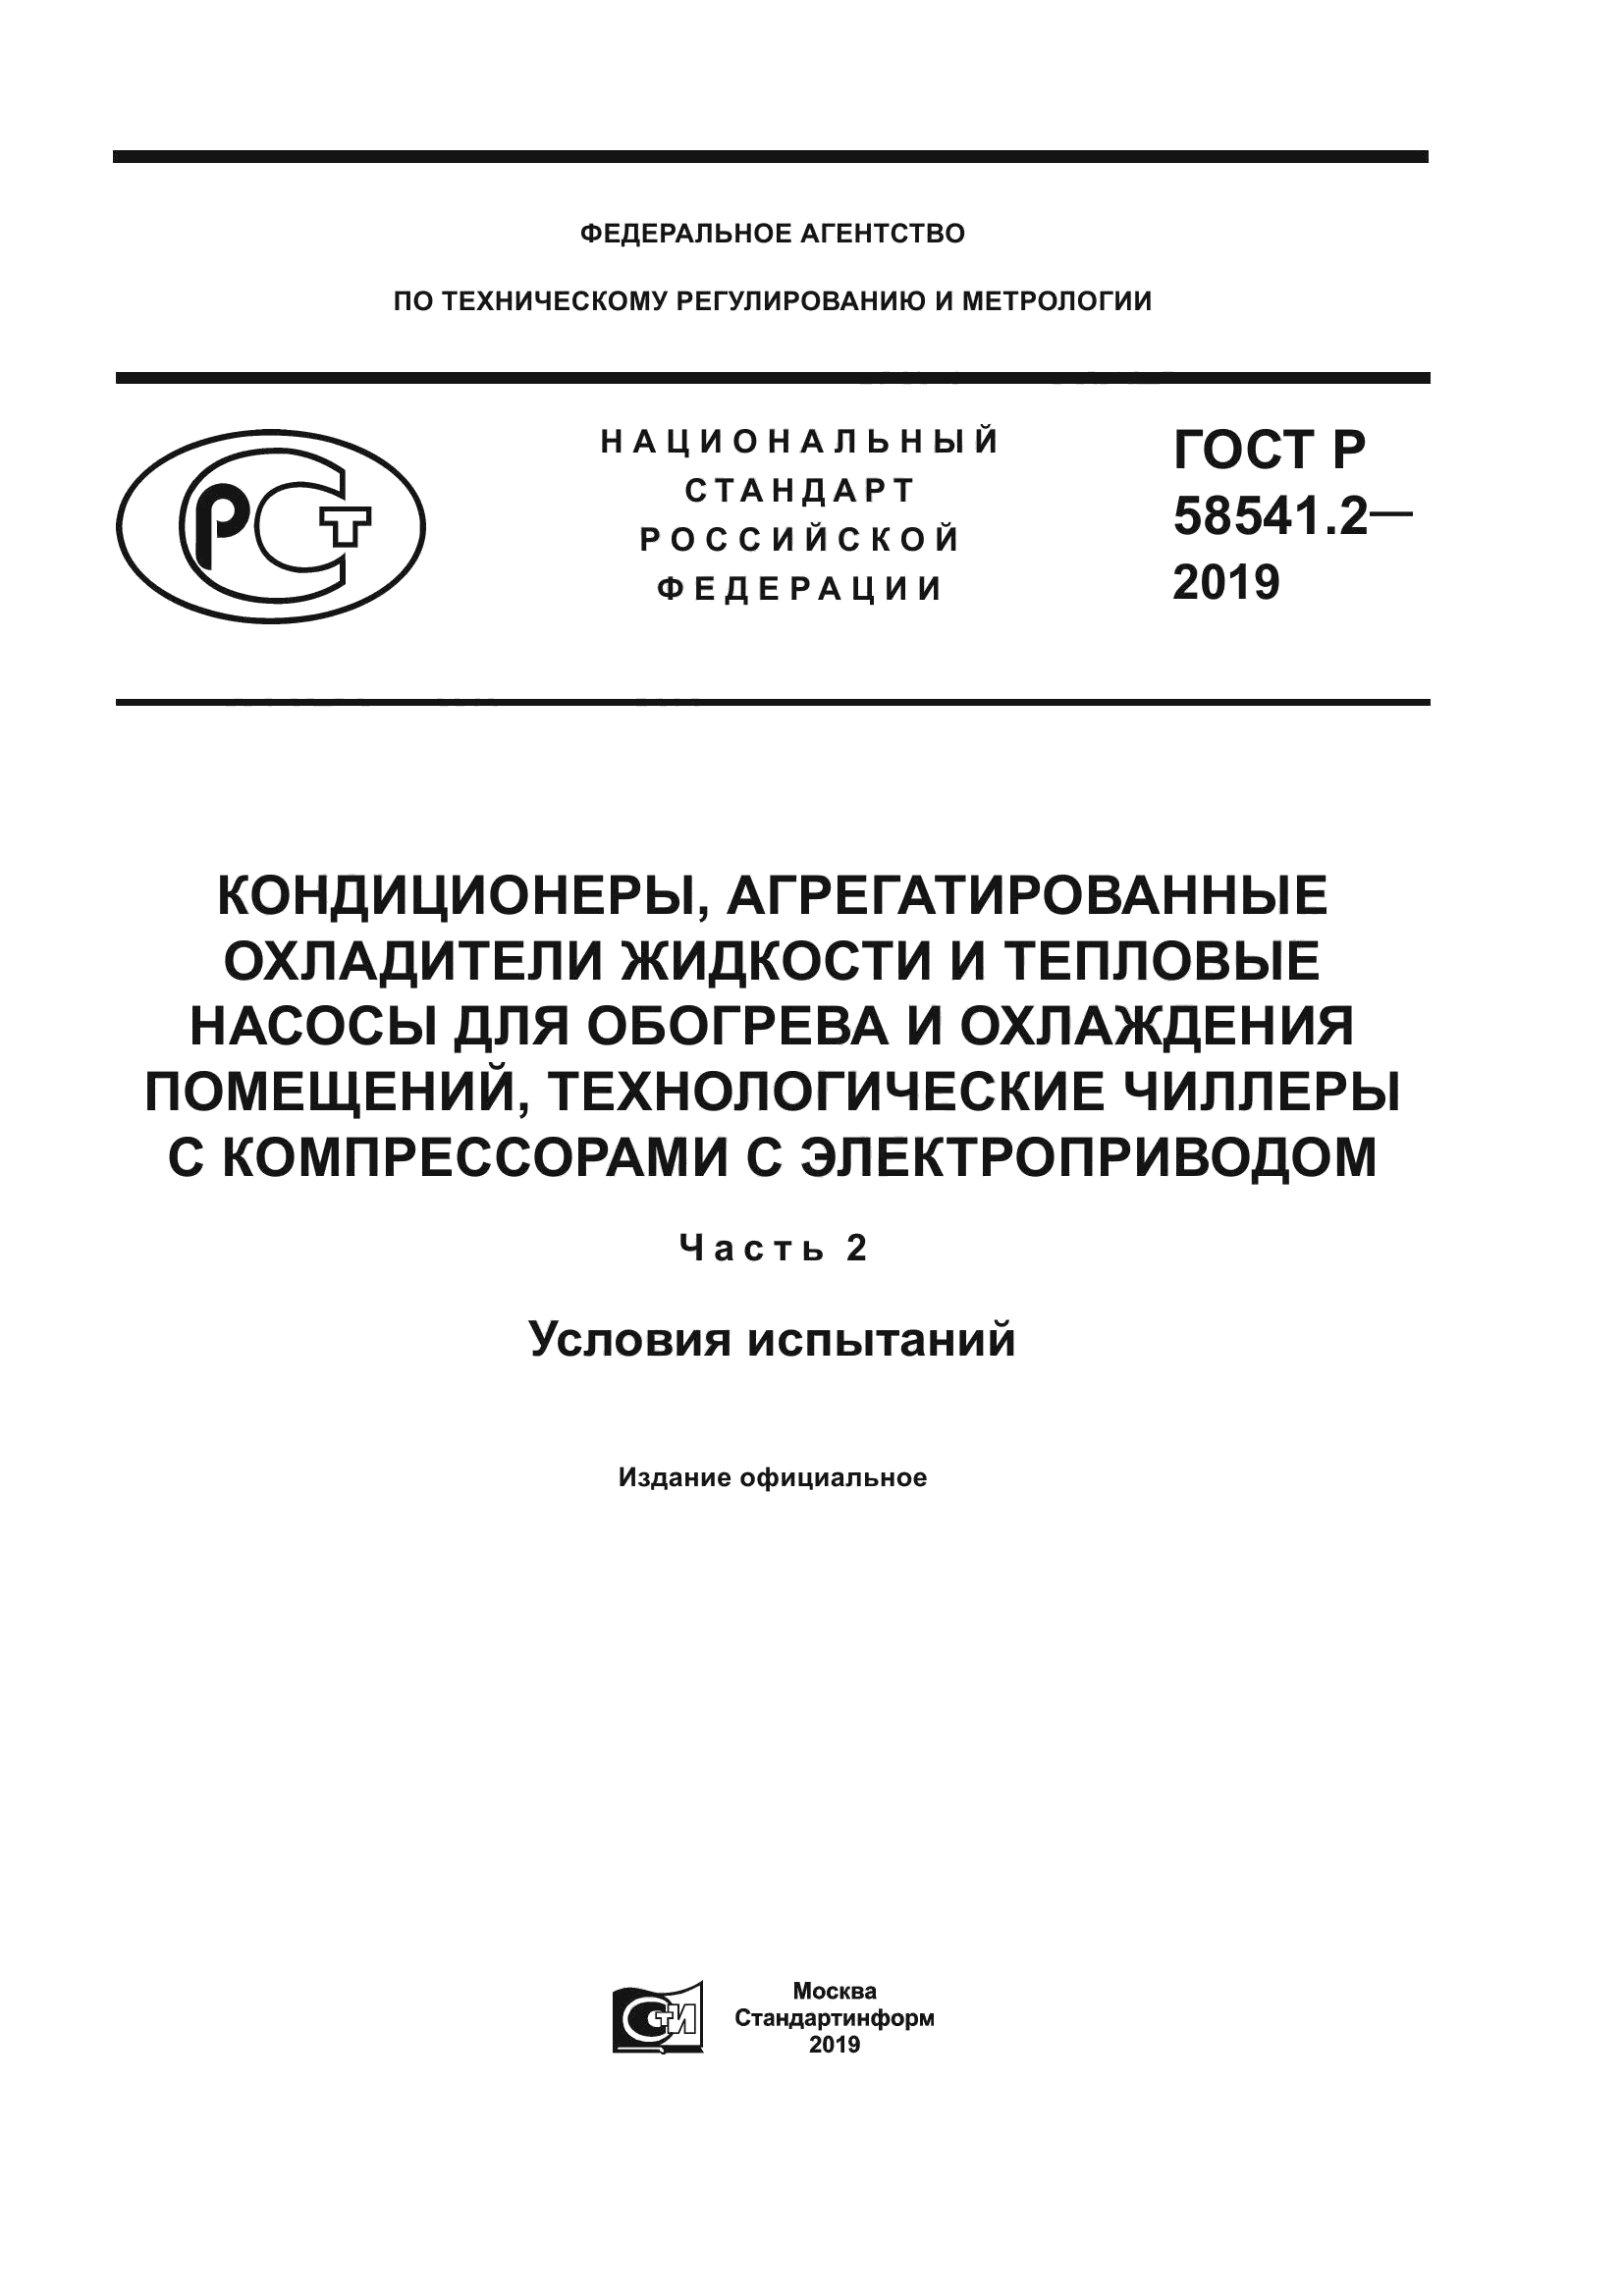 ГОСТ Р 58541.2-2019